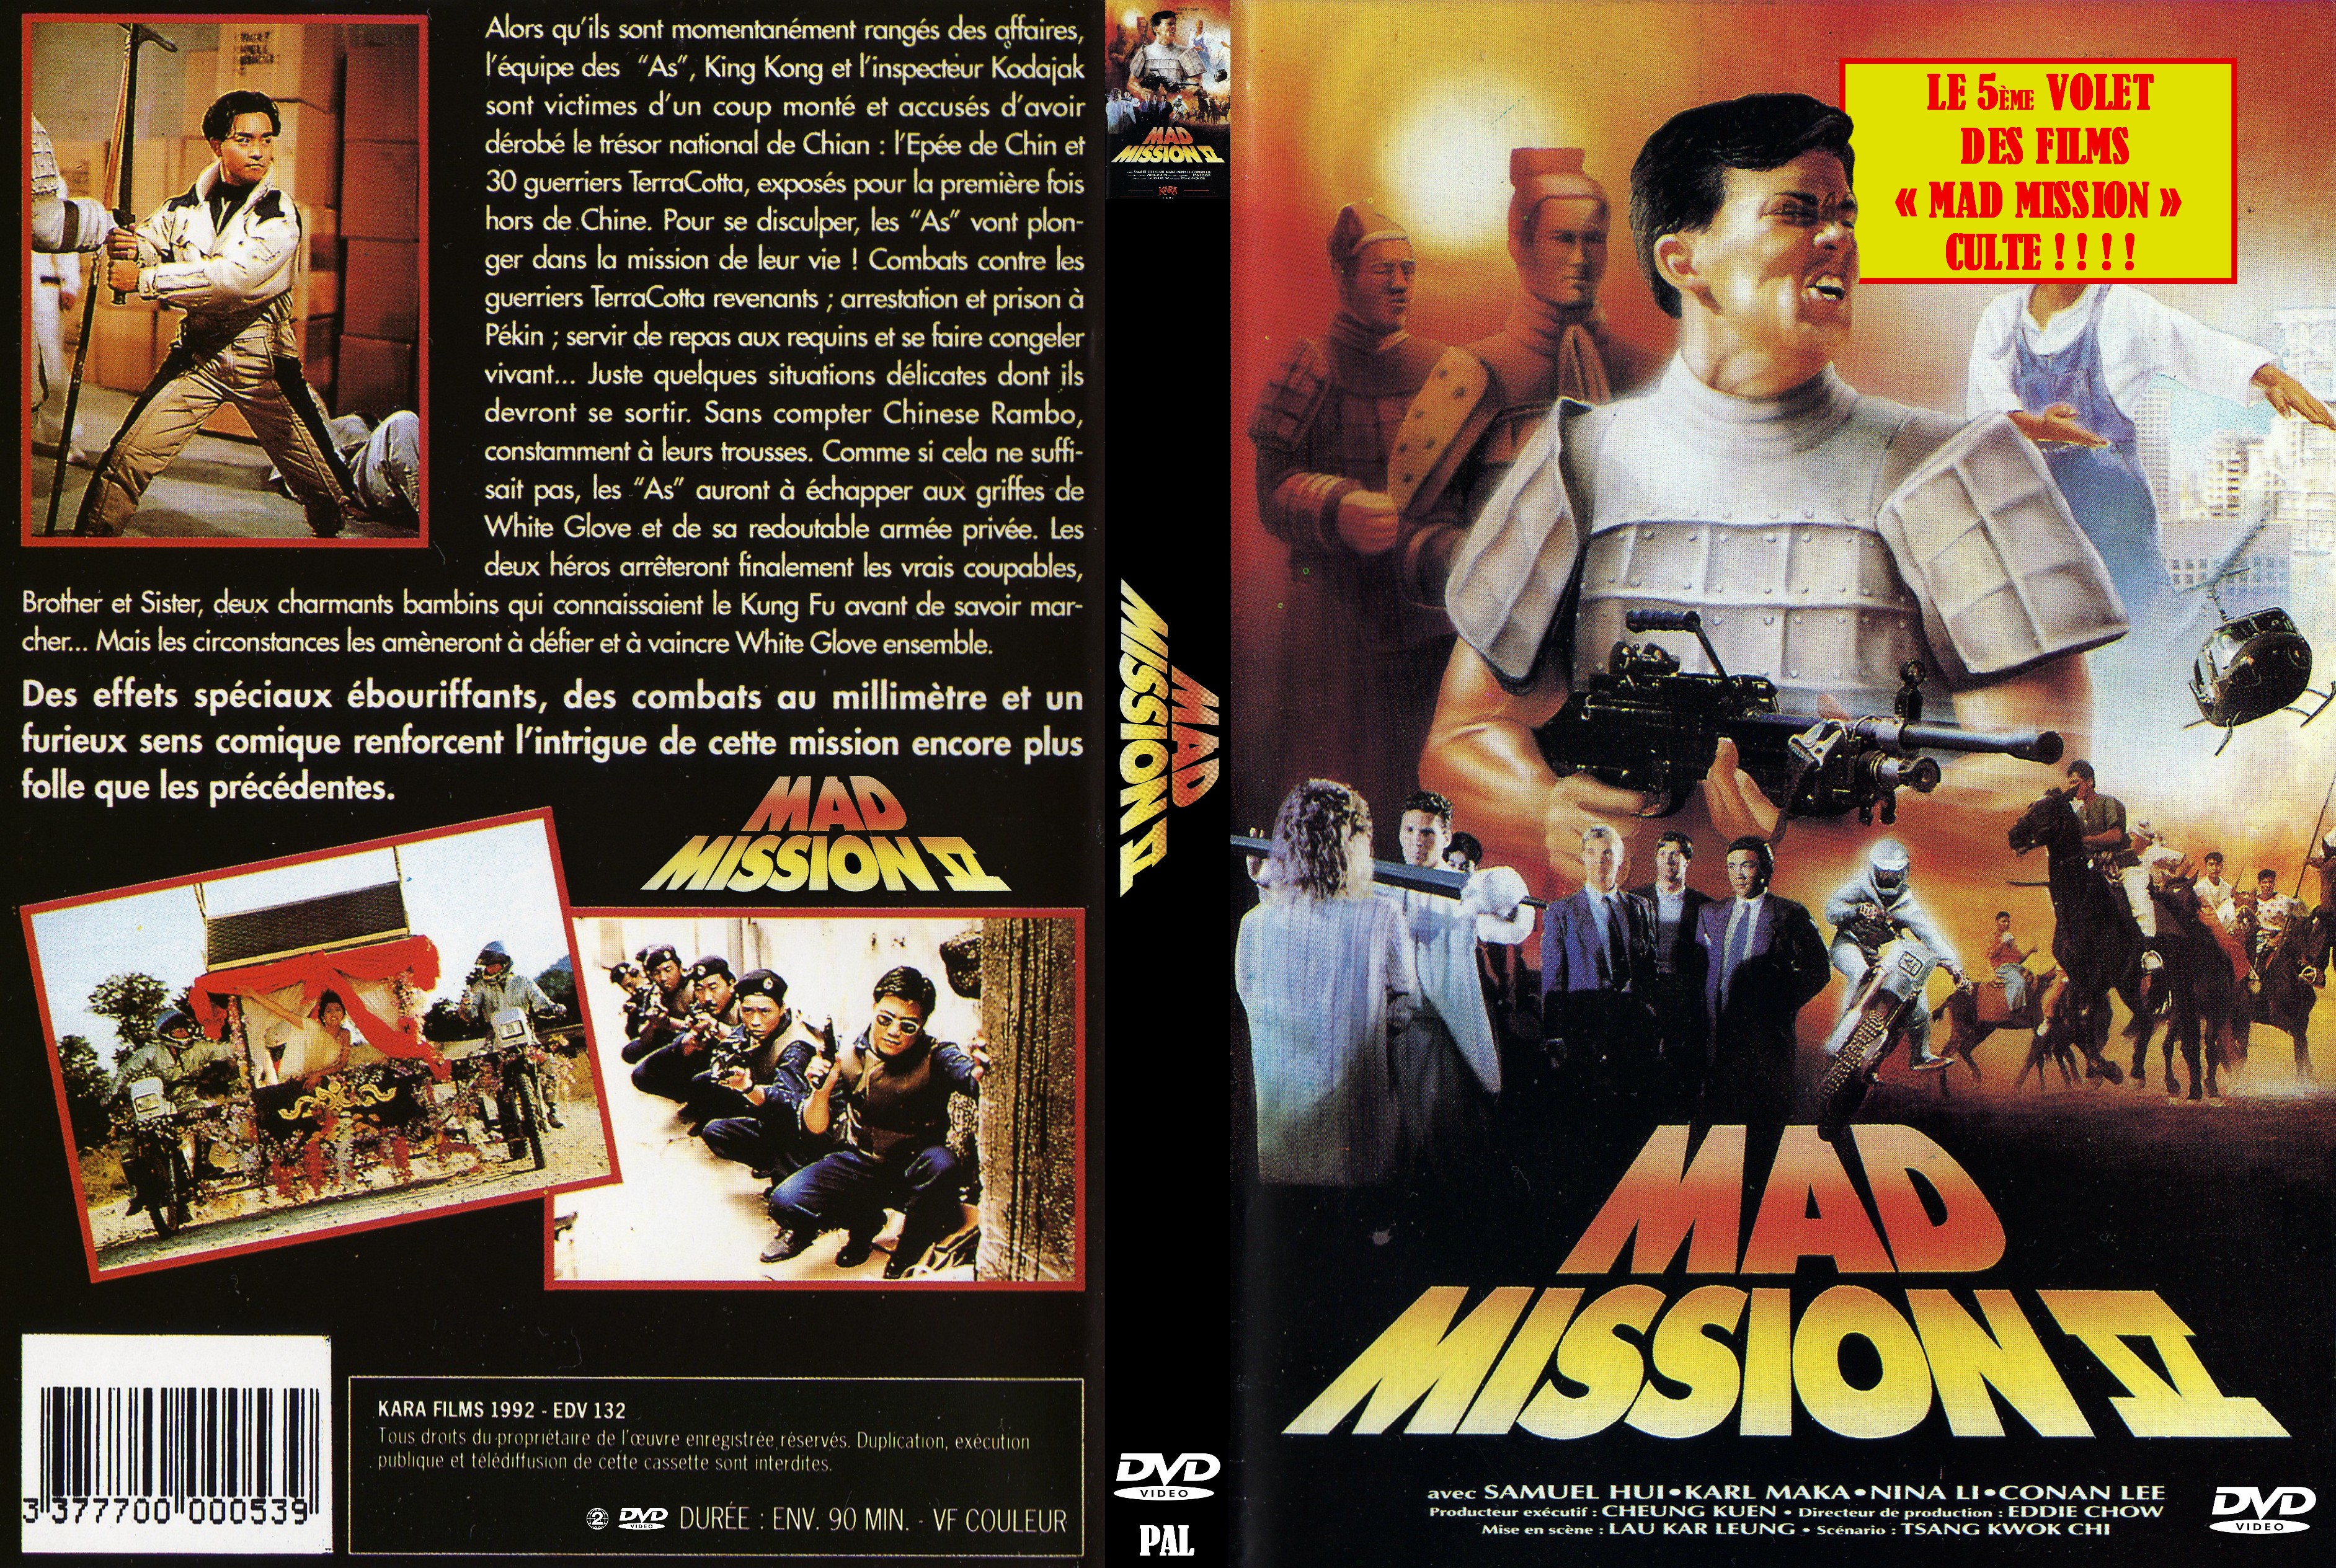 Jaquette DVD Mad mission 5 custom